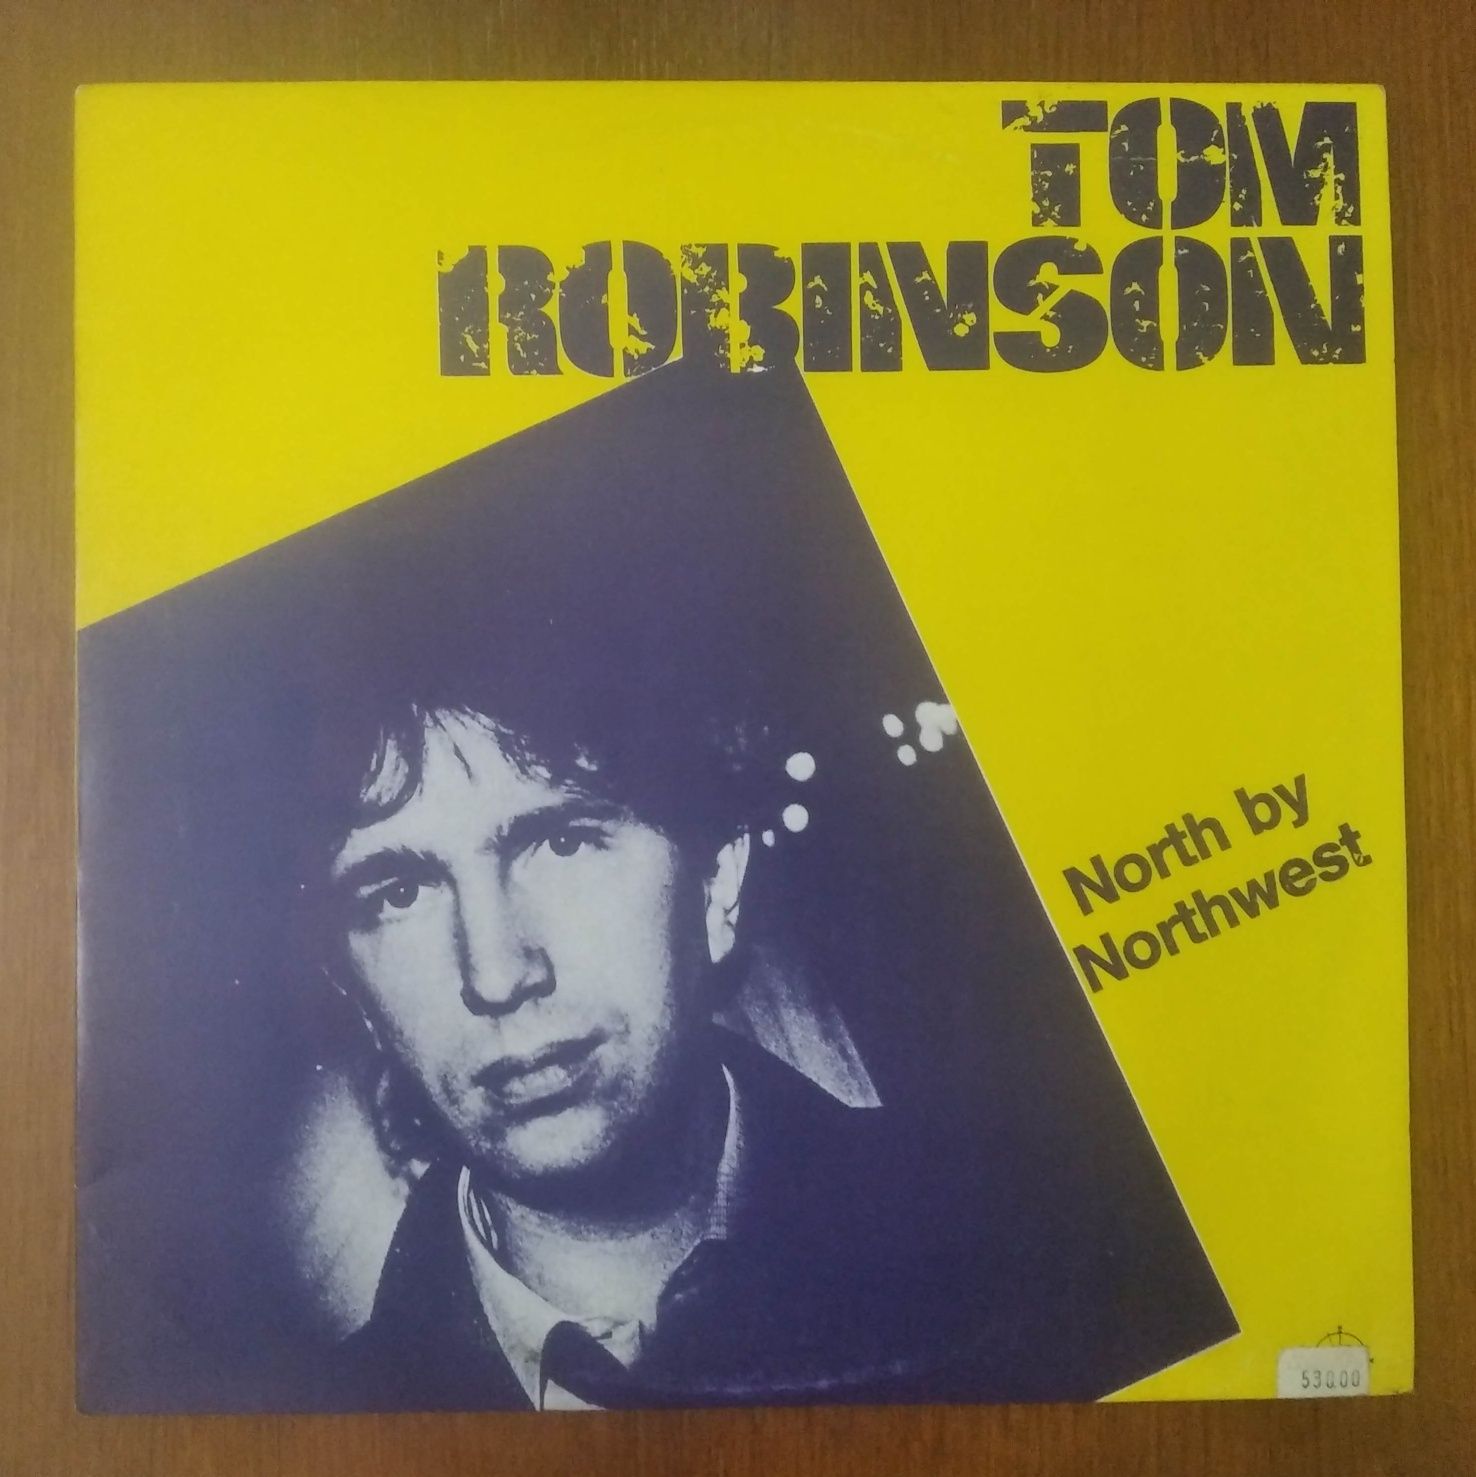 Tom Robinson disco de vinil "North by Northwest".